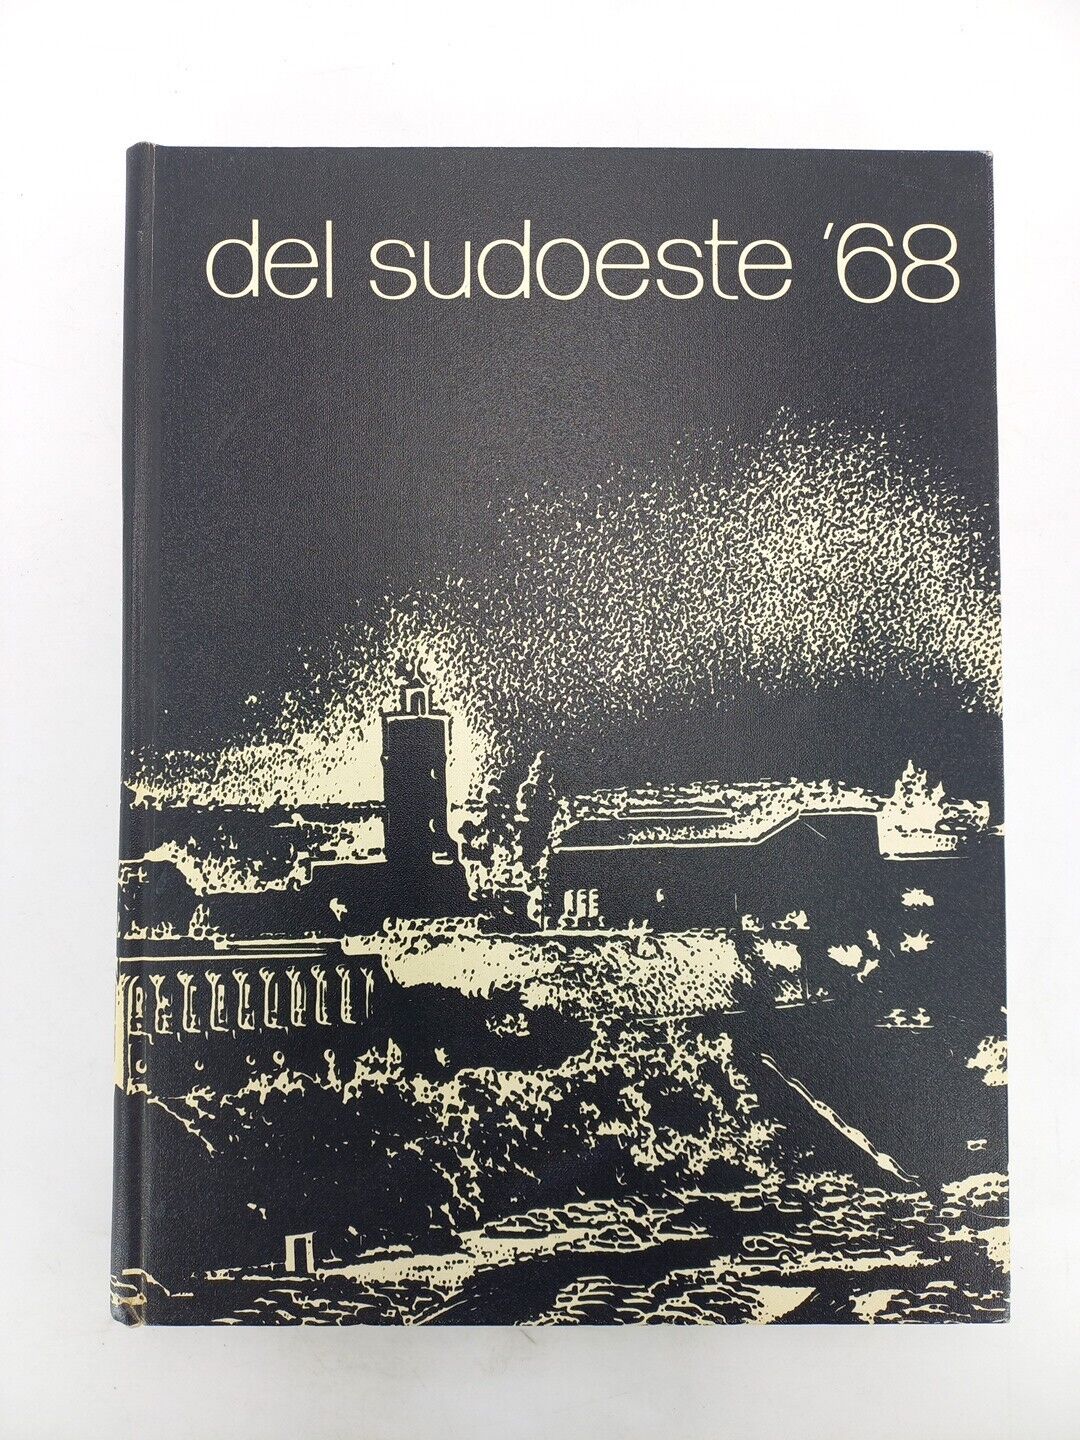 Vintage 1968 San Diego State university Del Sudoeste yearbook.